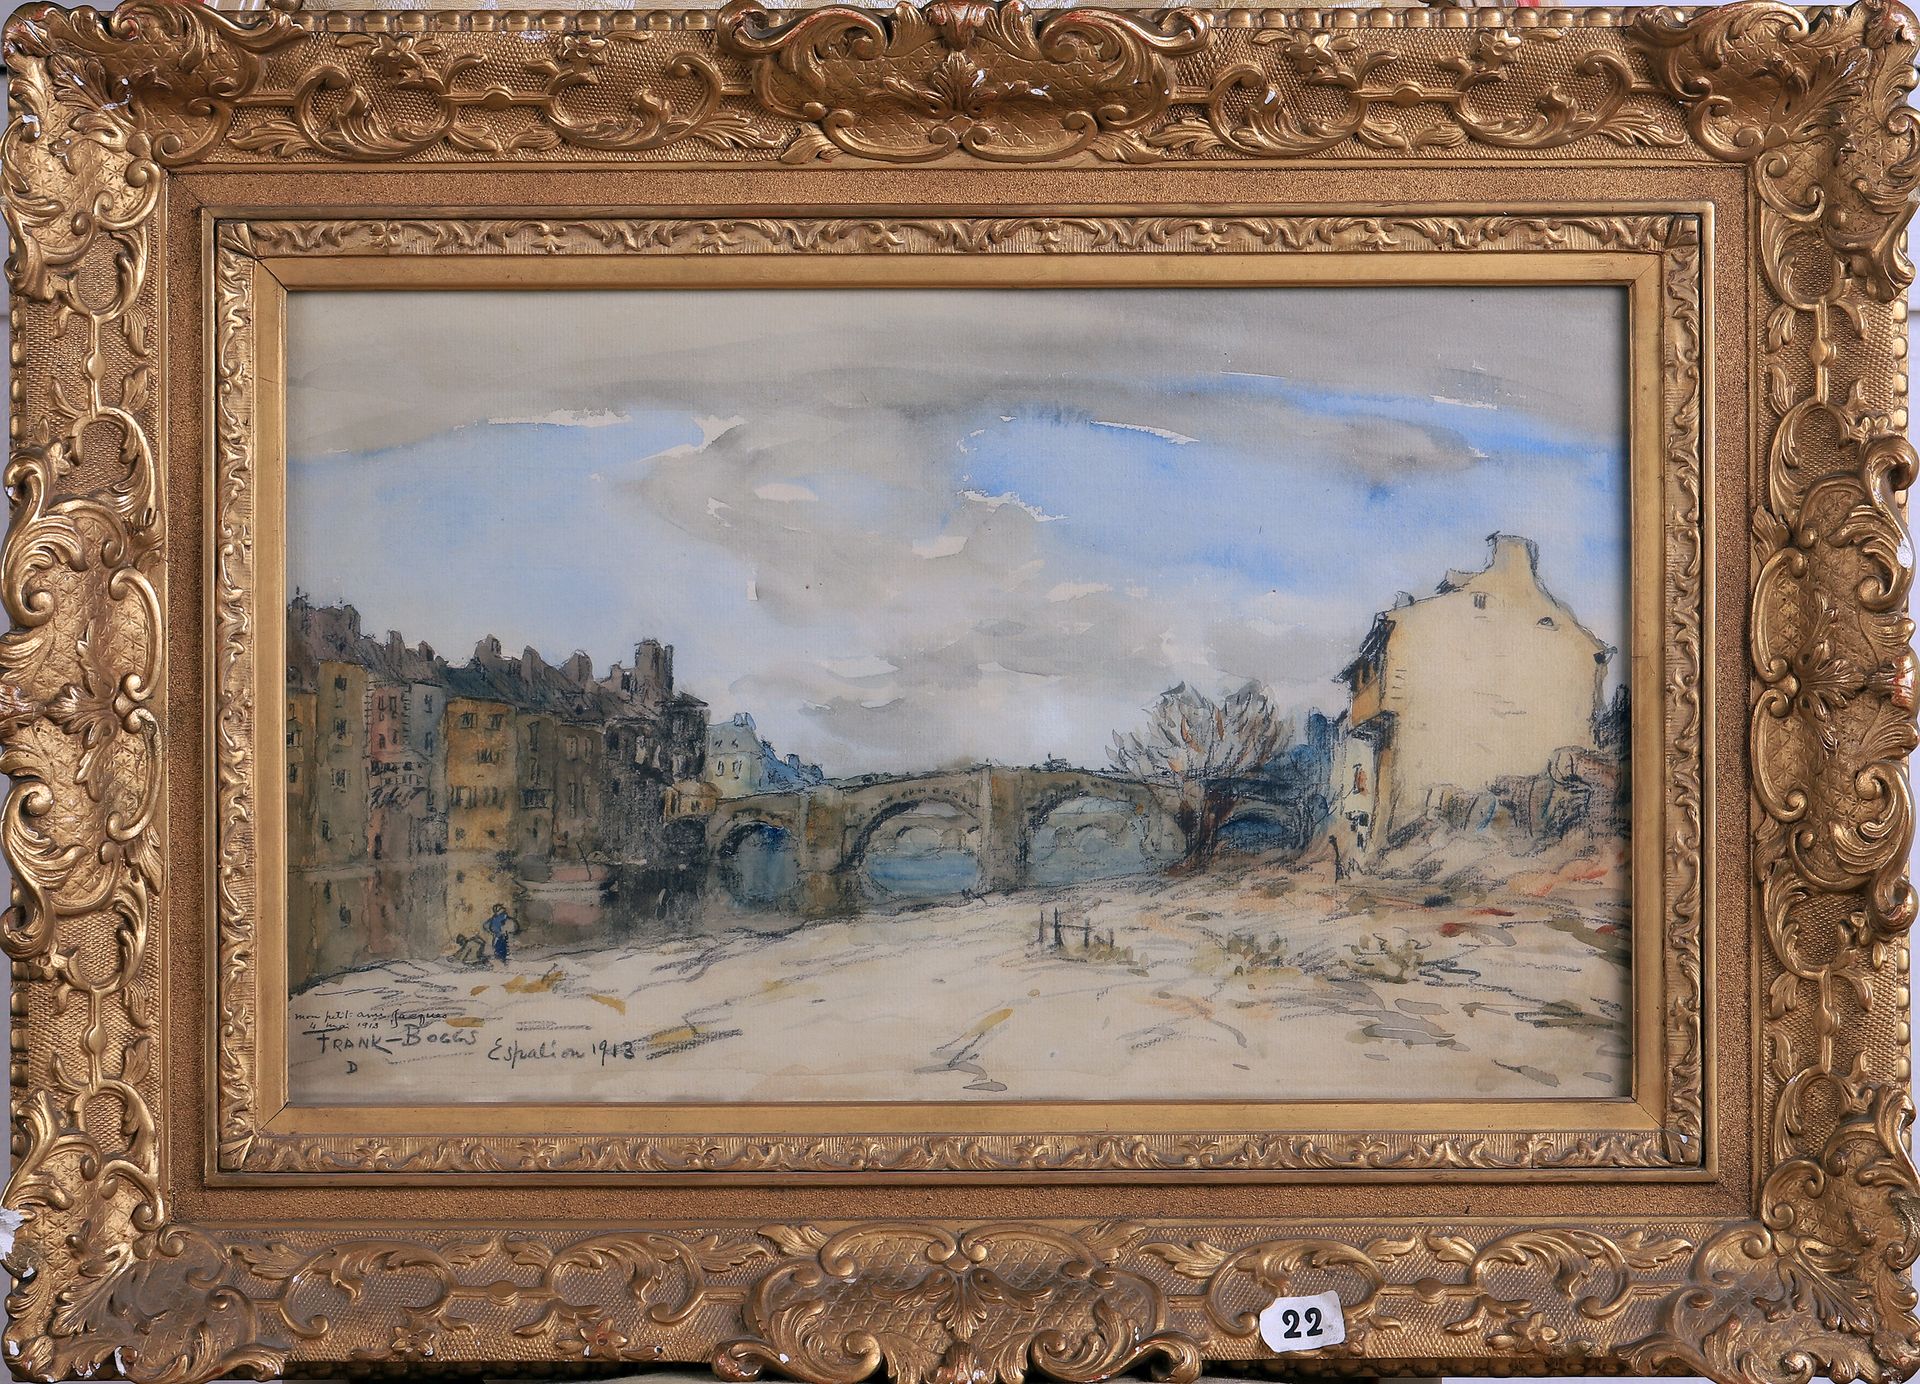 Null 弗兰克-博格斯(1855-1926)

ǞǞǞ

水彩画，左下方有签名、位置和日期 "Espalion 1913"，献给 "我的小朋友Jacques &hellip;